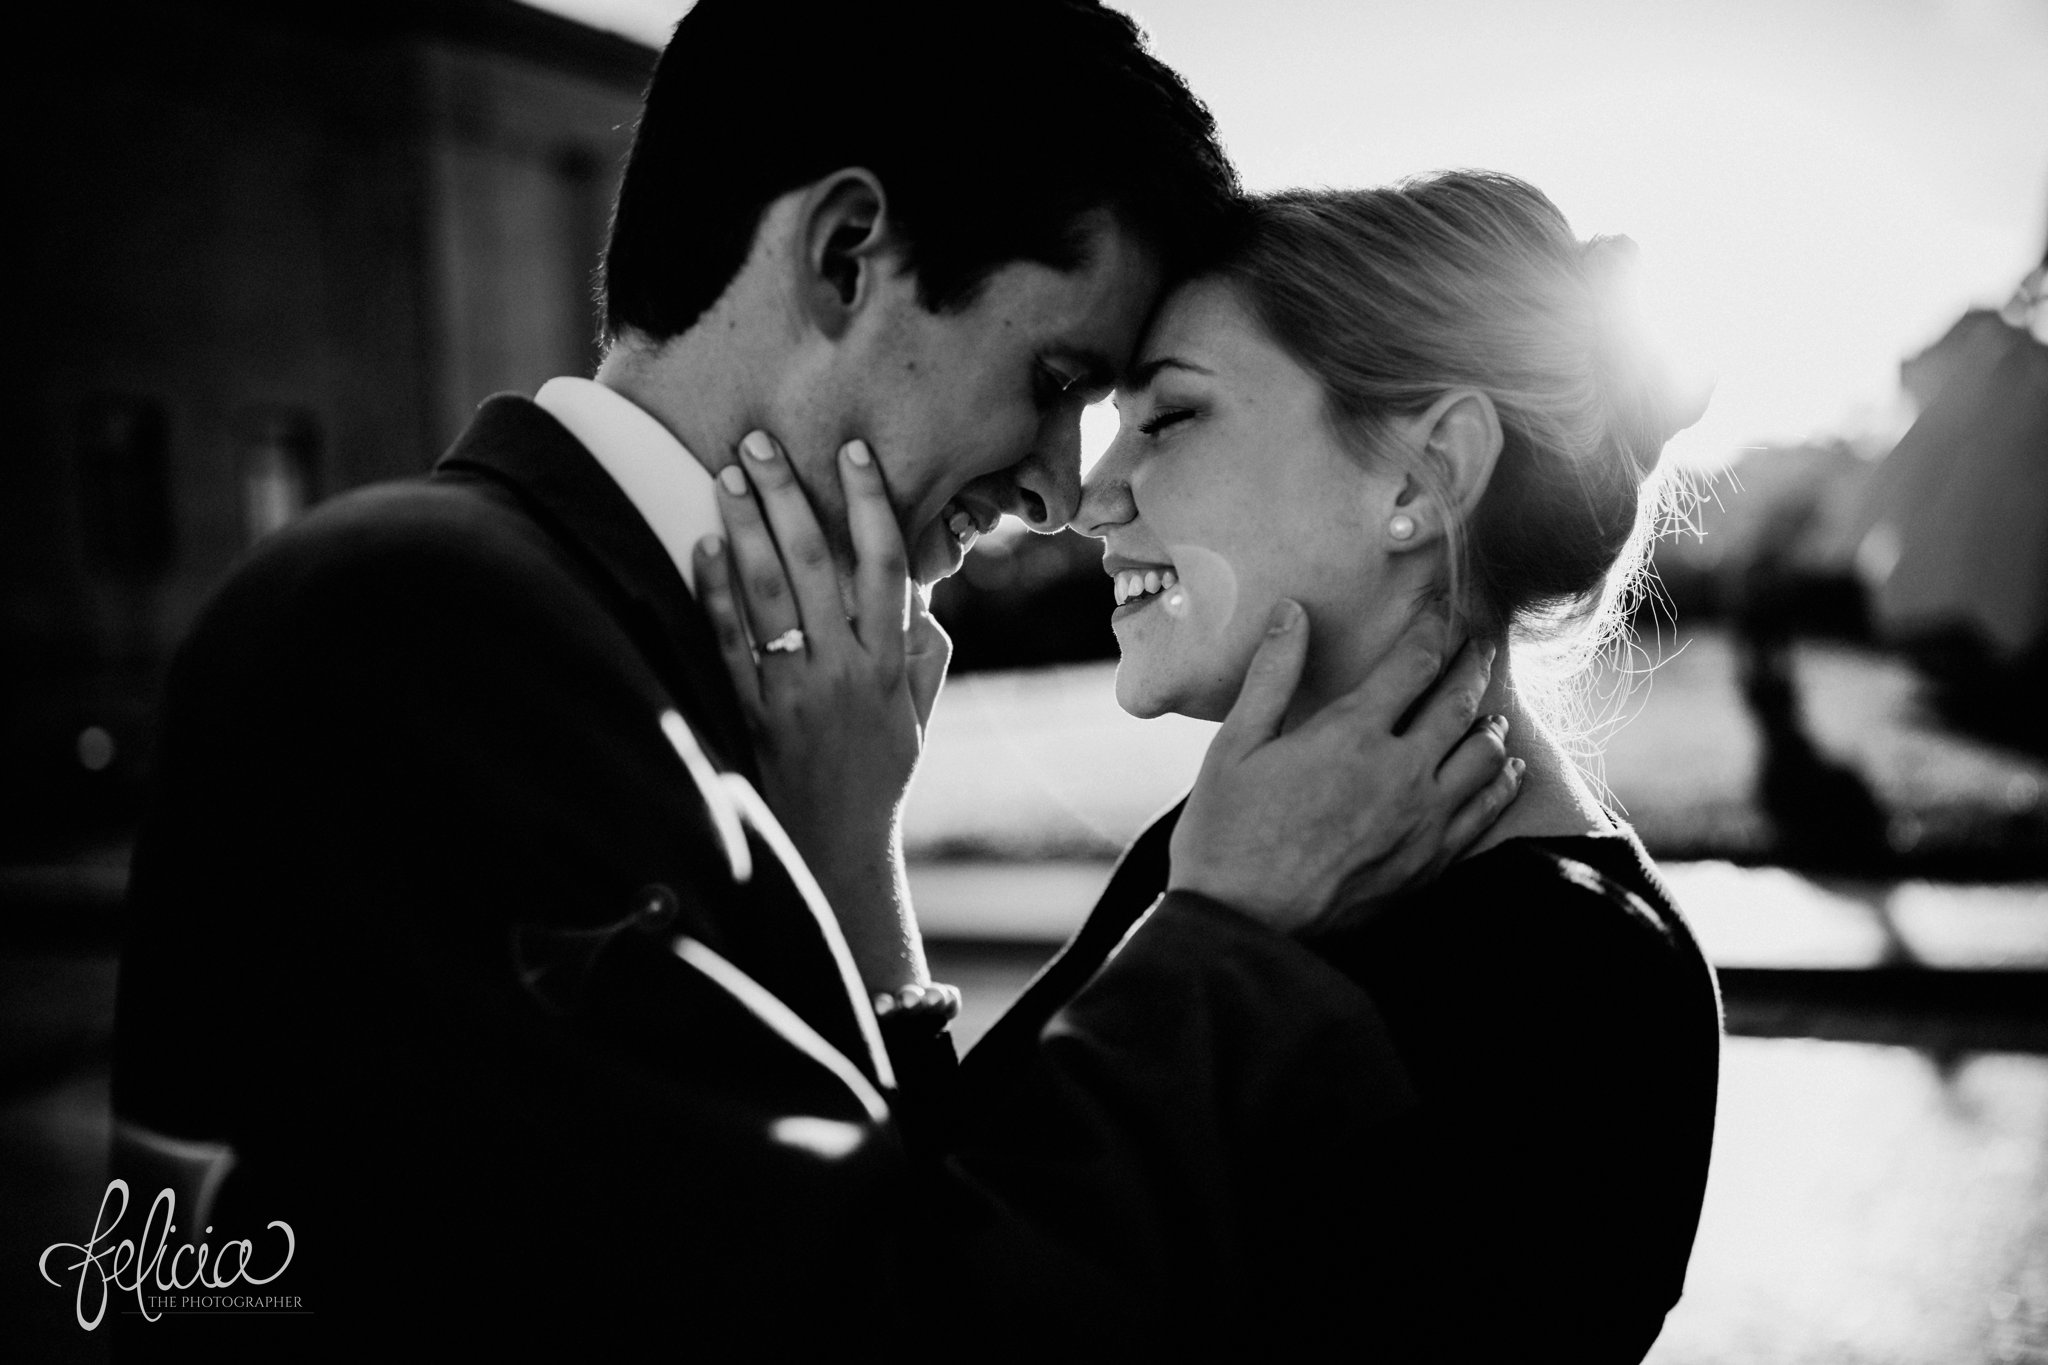 images by feliciathephotographer.com | wedding photographer | kansas city missouri | engagement | nelson atkins | true love | romantic | black and white | diamond ring | contrast | sunset | 